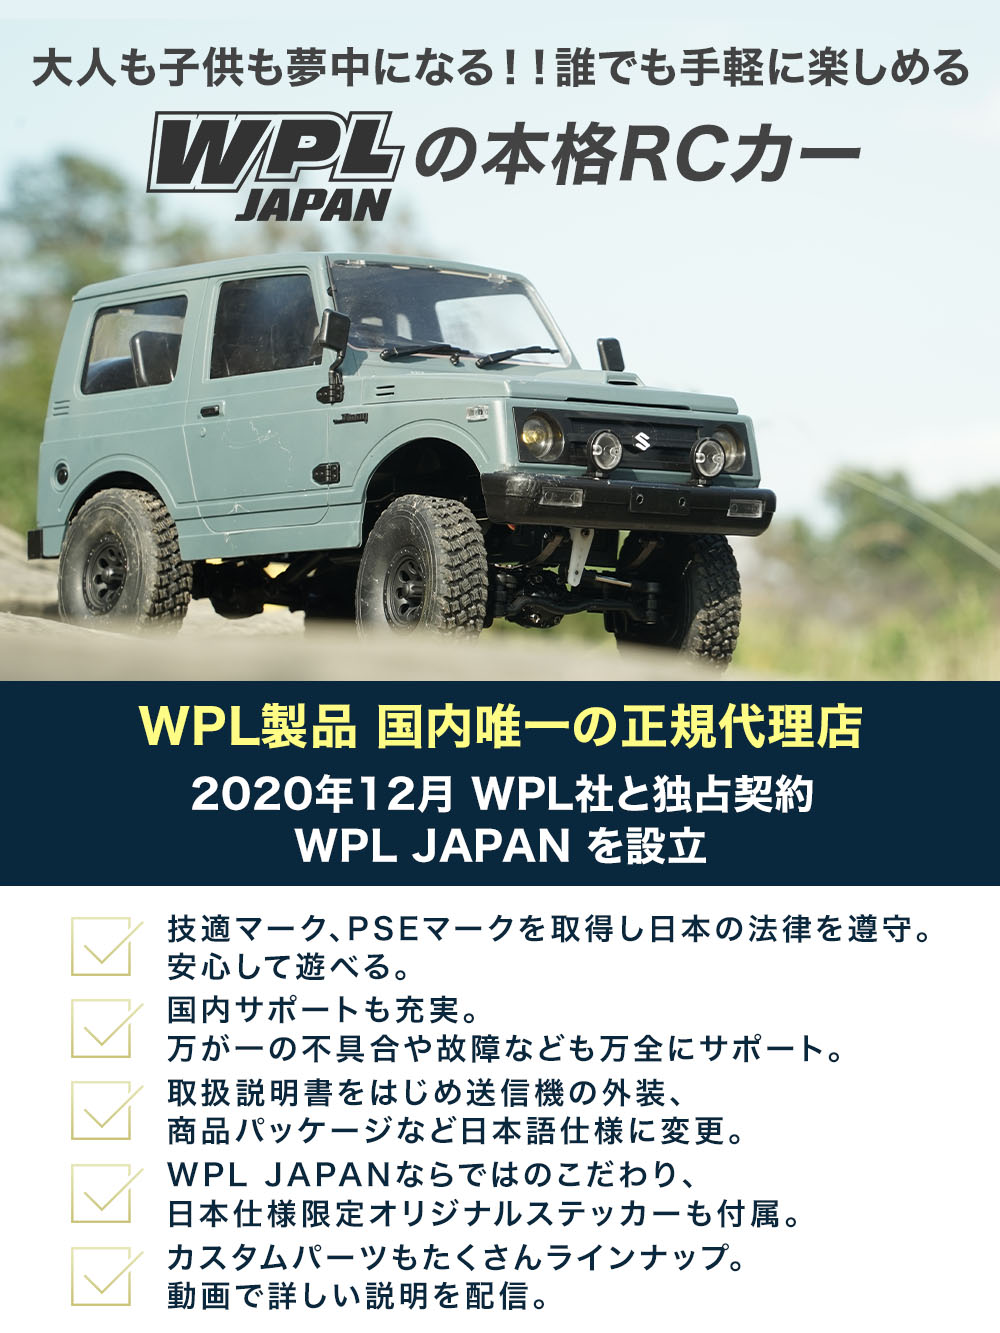 WPL JAPAN スズキ ジムニー(JA11) 1/10 アウトドア ラジコン オフ 